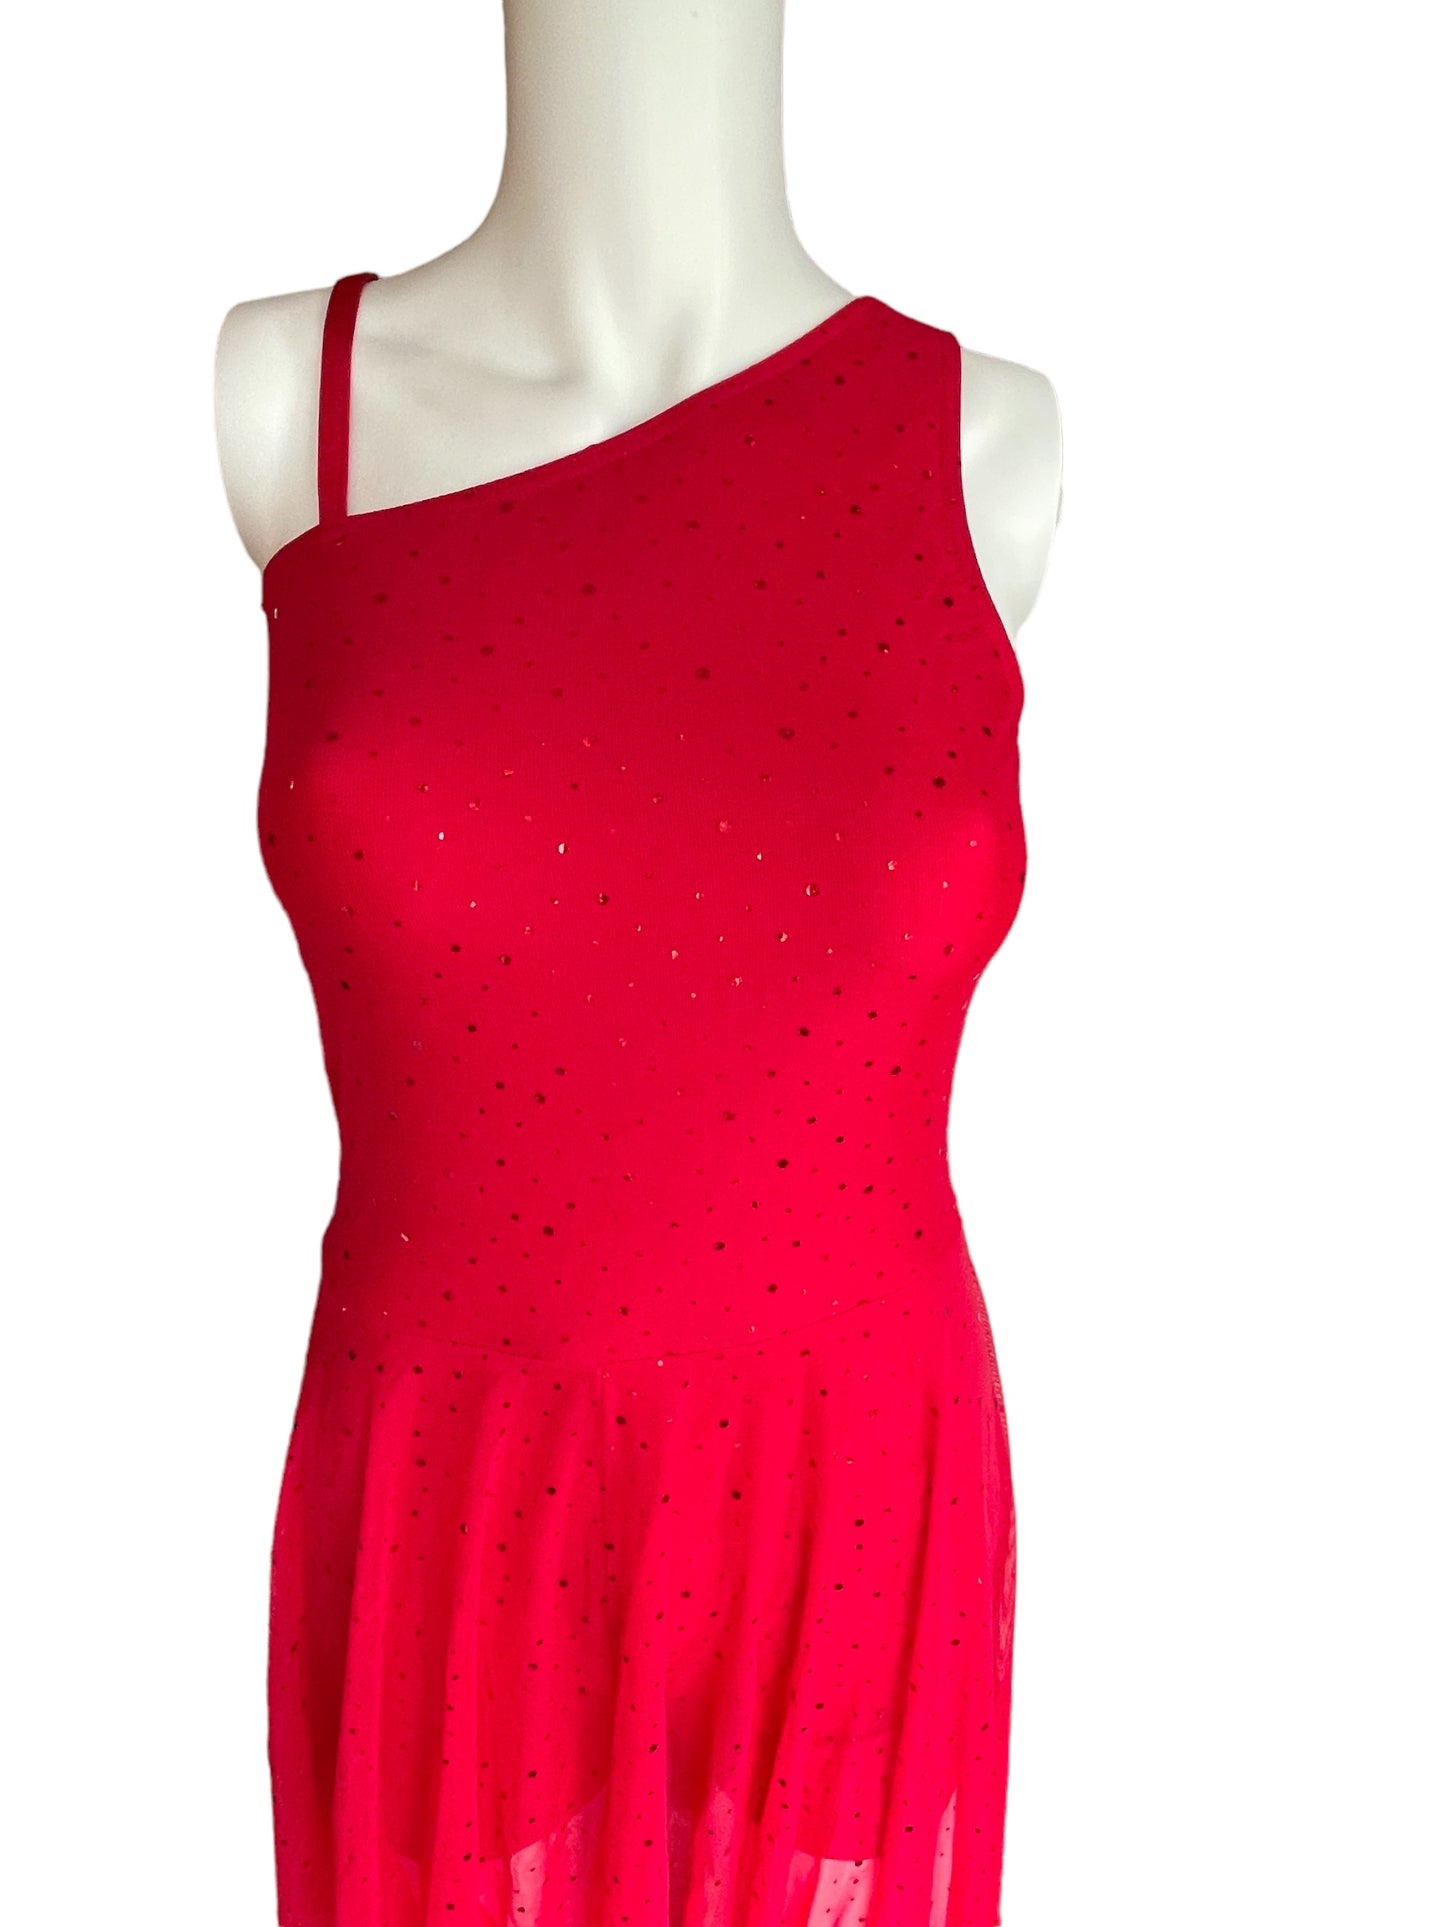 ASYMMETRICAL RED SPARKLE DRESS